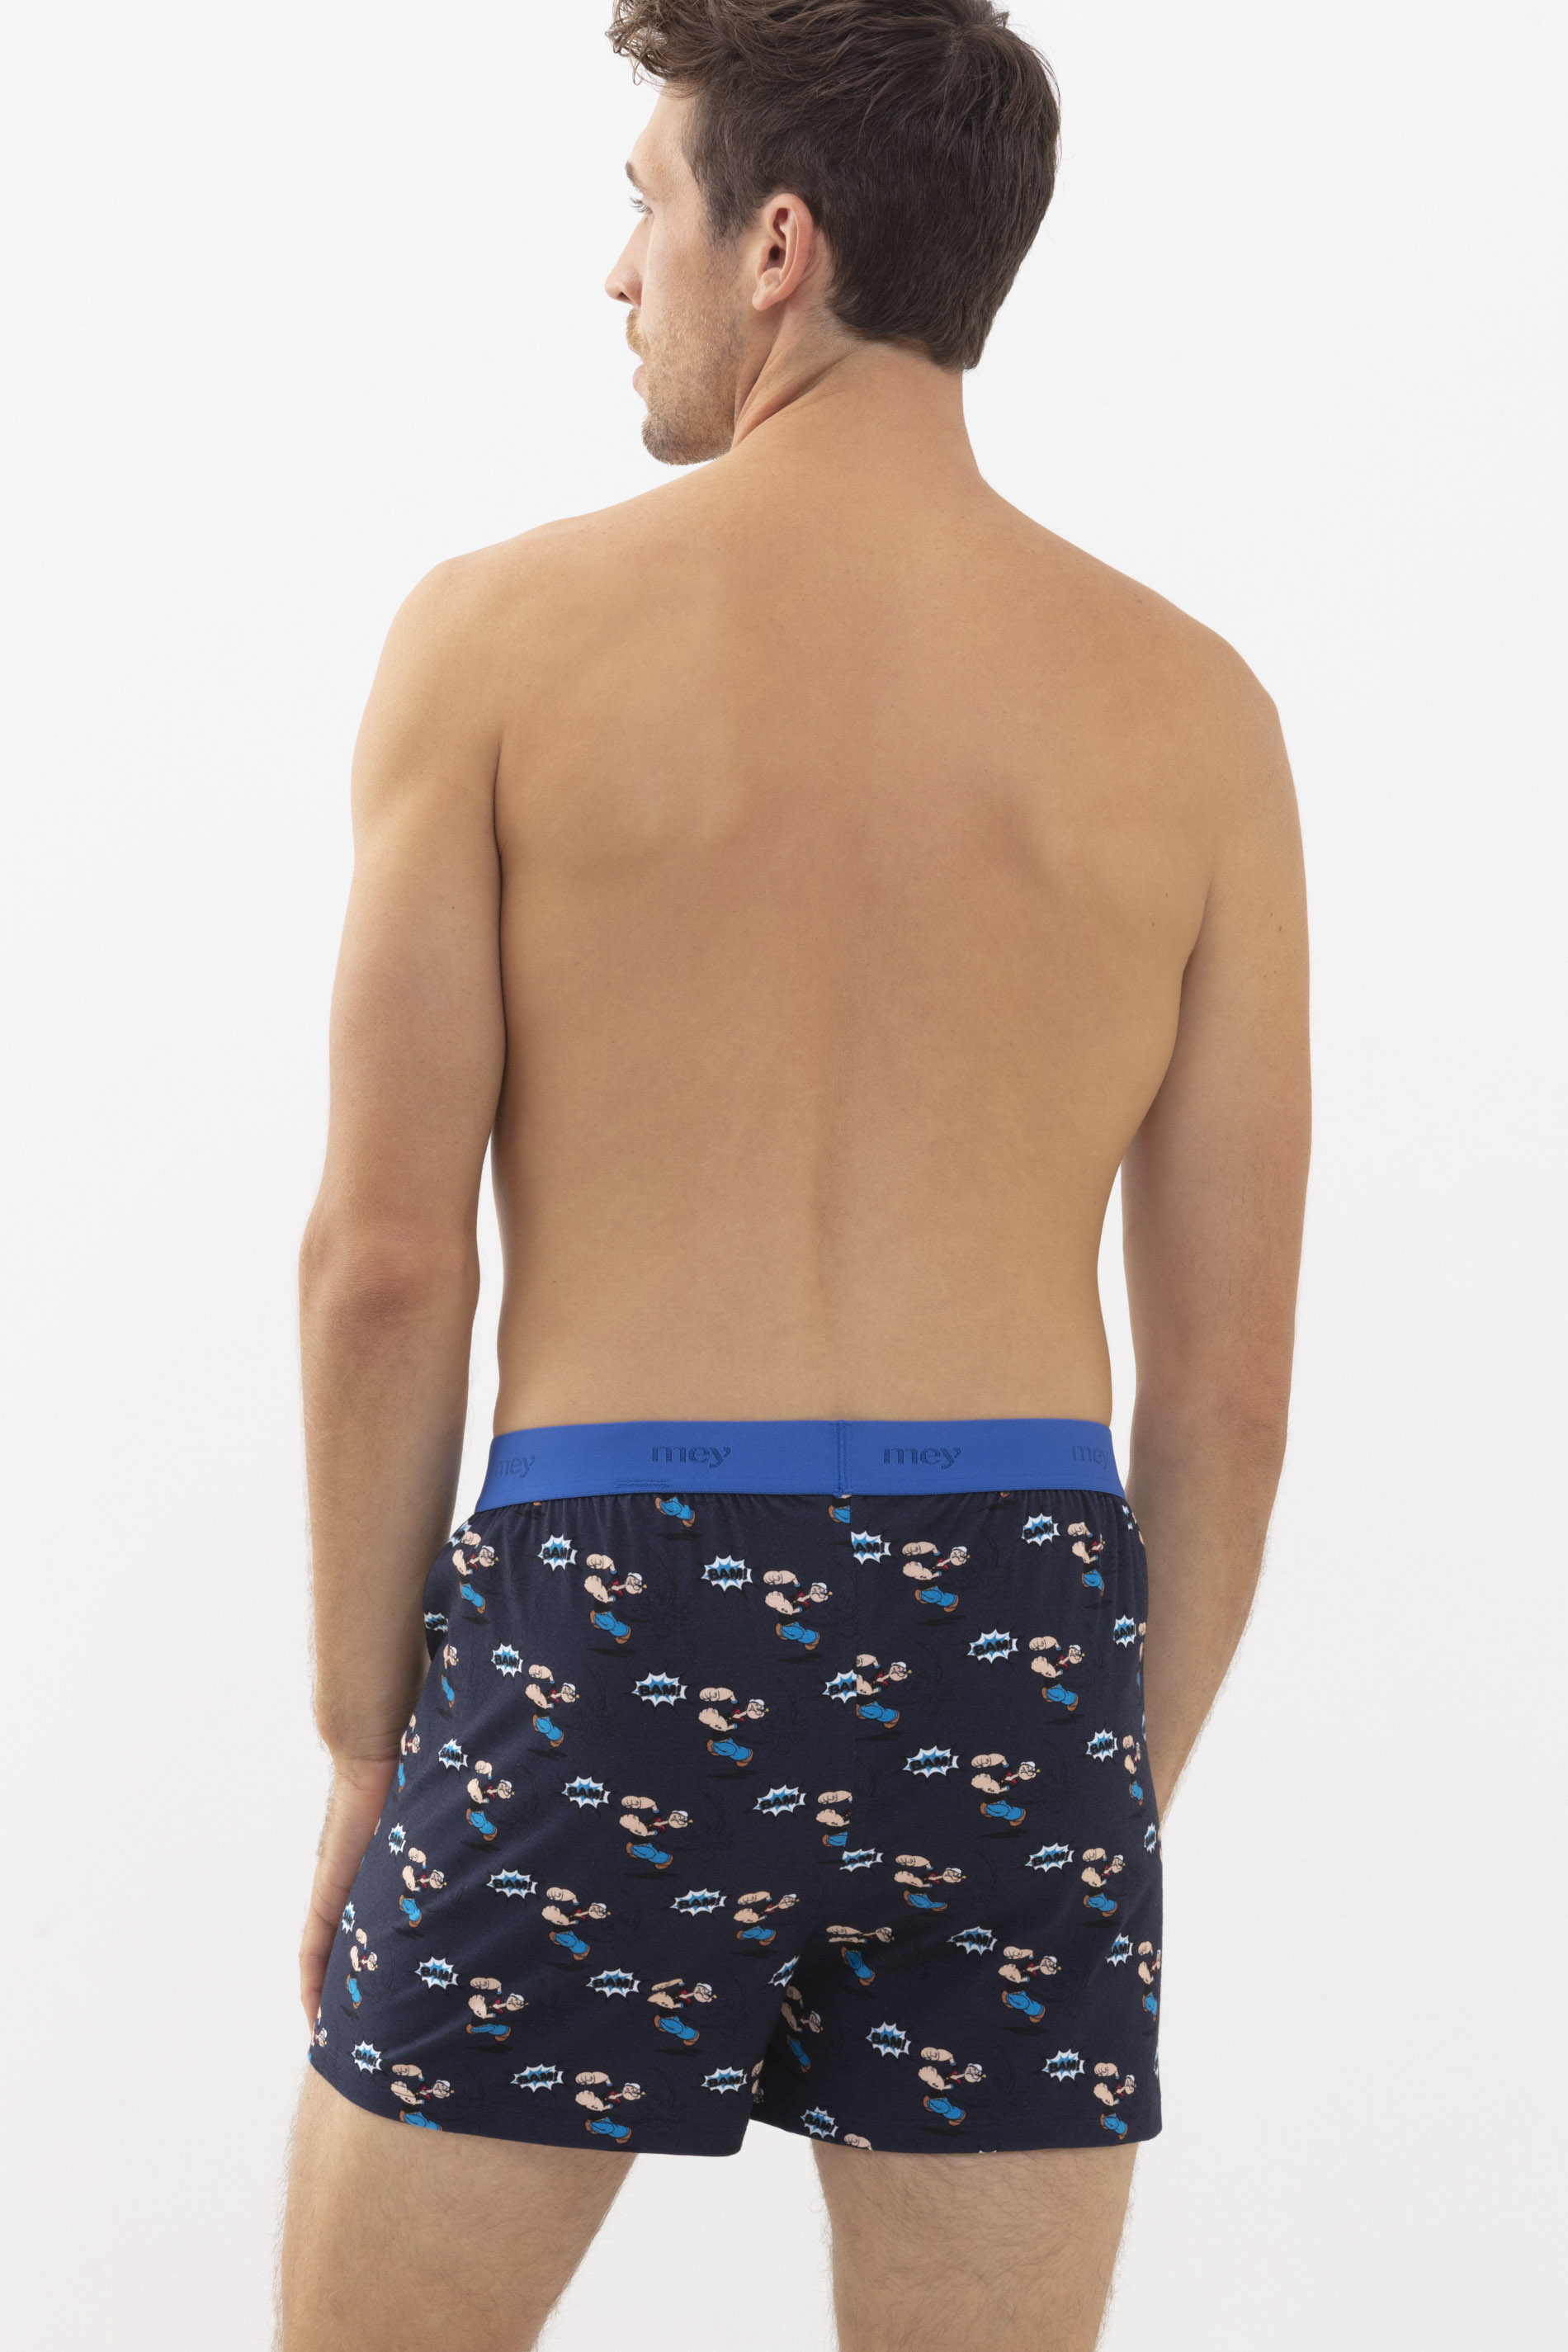 Boxer shorts Yacht Blue Serie POPEYE©xMEY Rear View | mey®